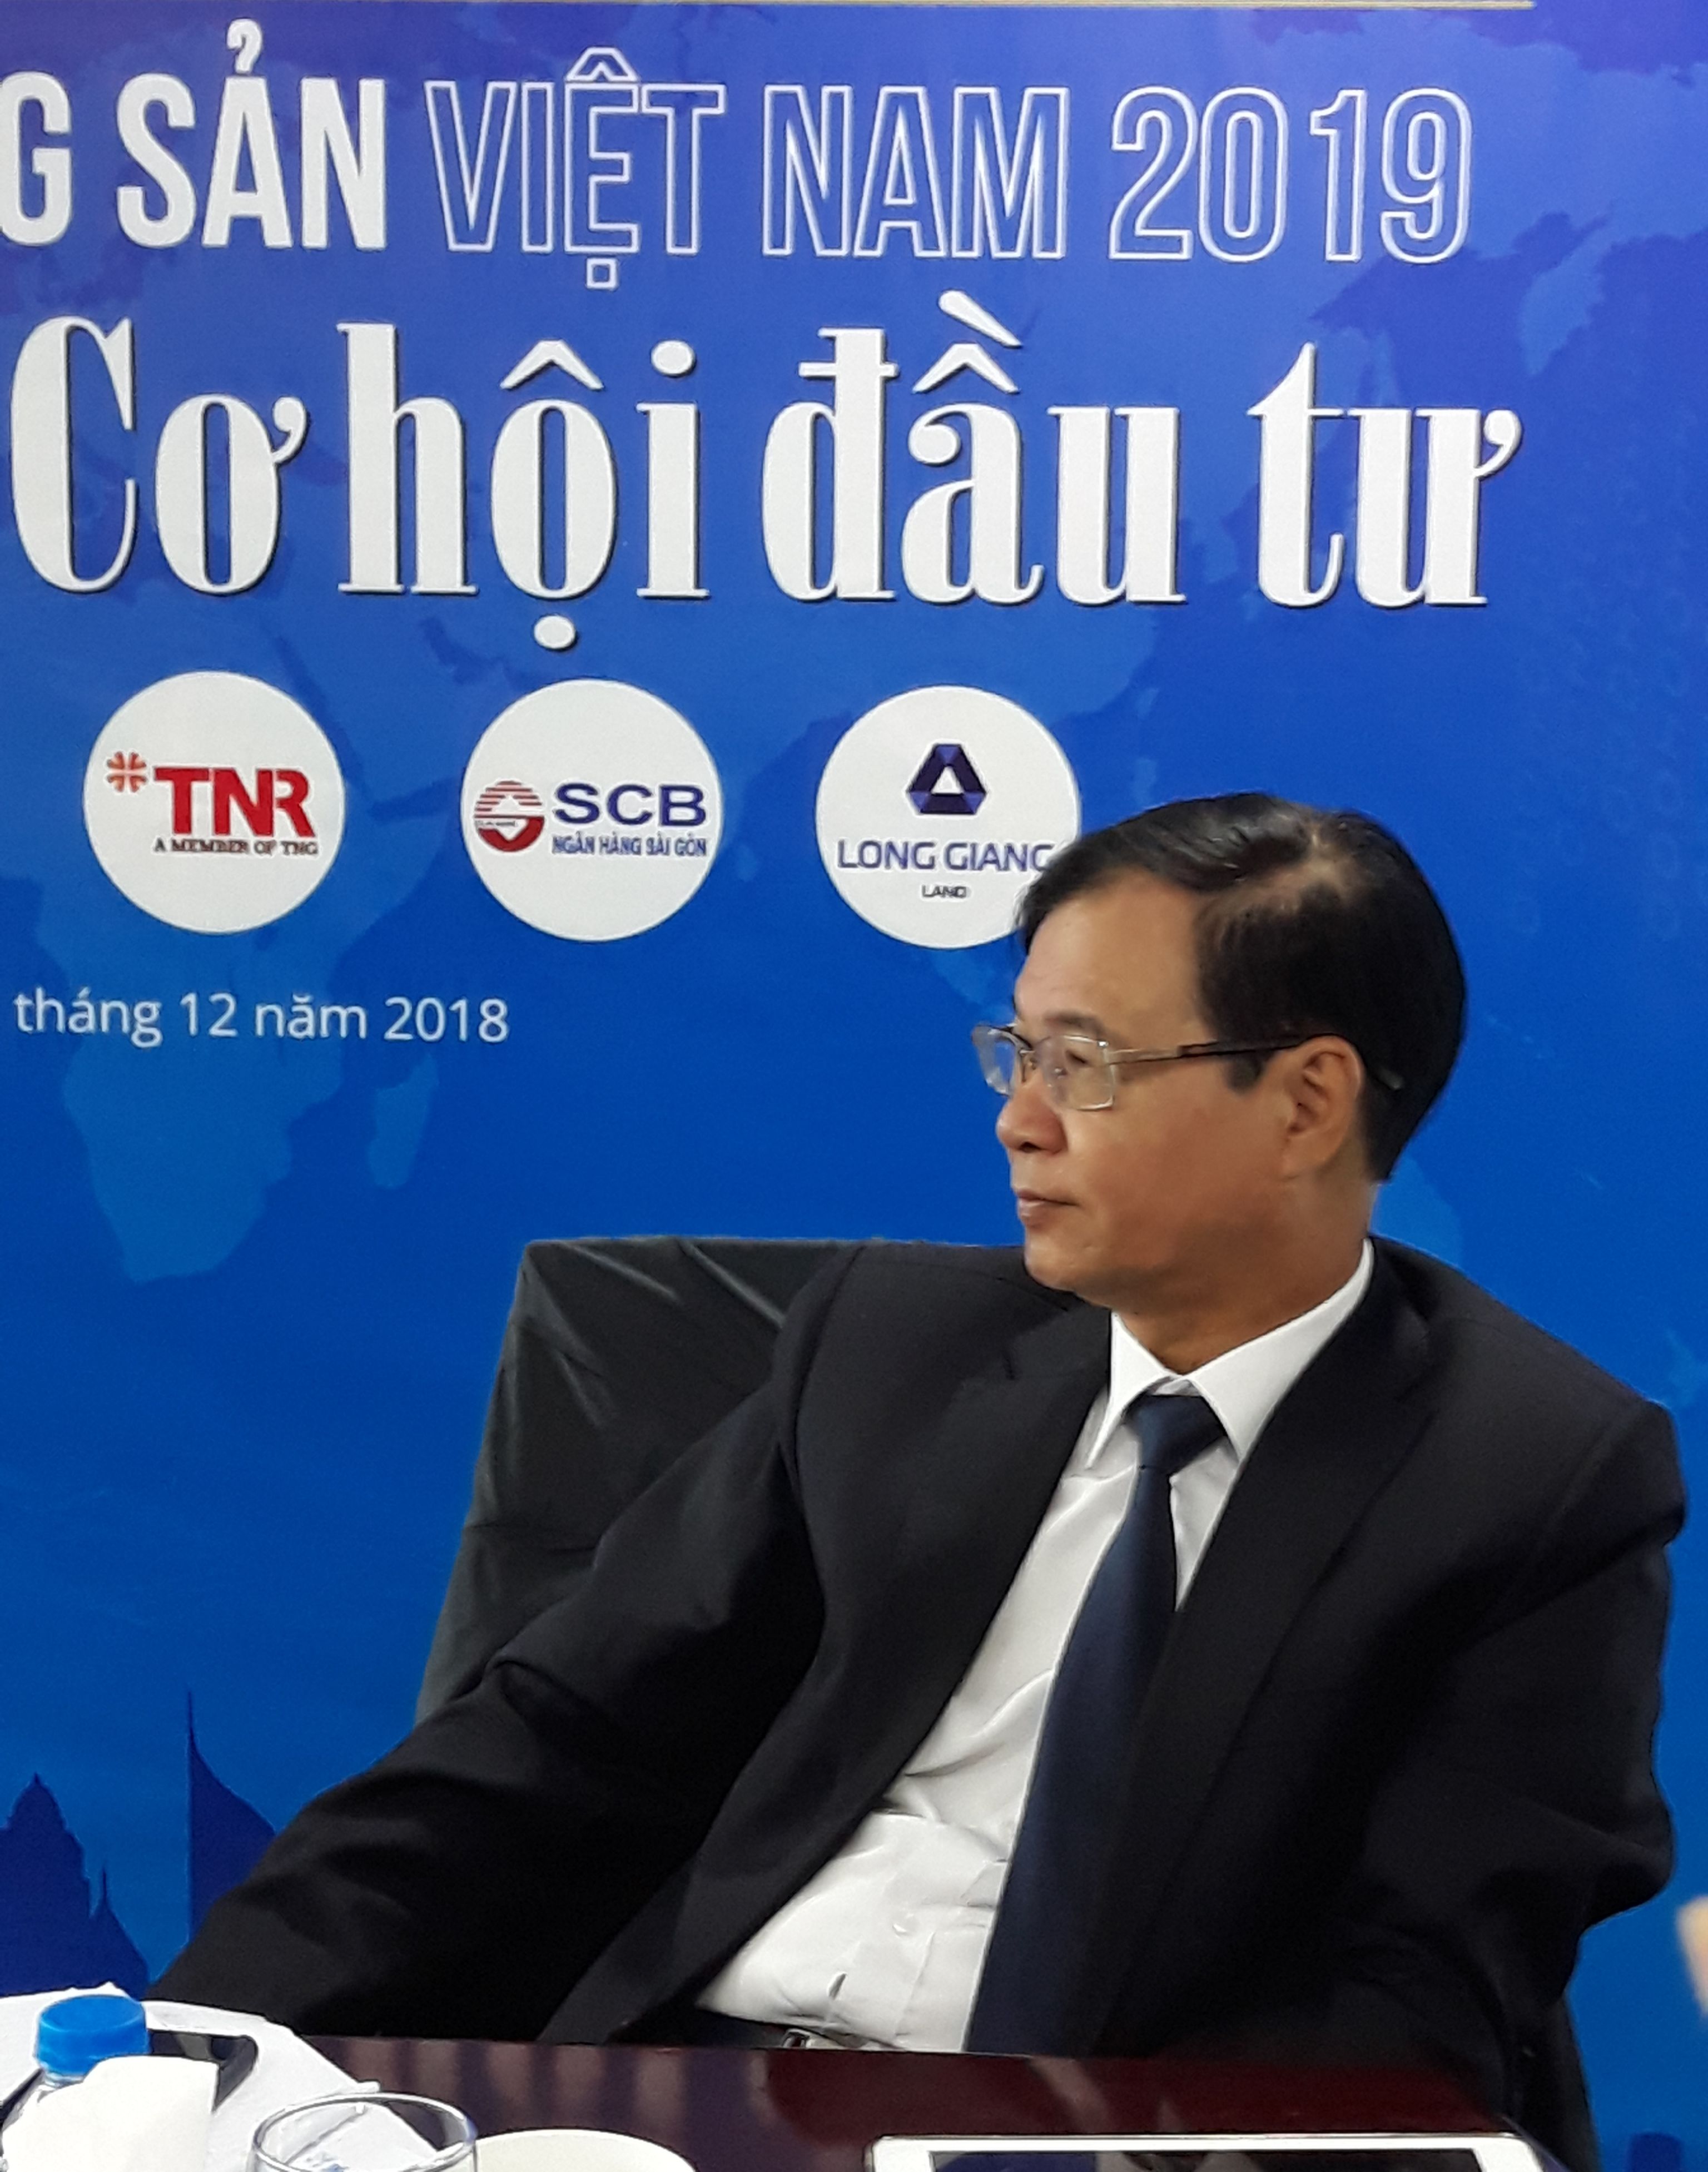 Mr. Nguyen Manh Ha, Vice President of Vietnam National Real Estate Association and President of Vietnam Association of Realtors